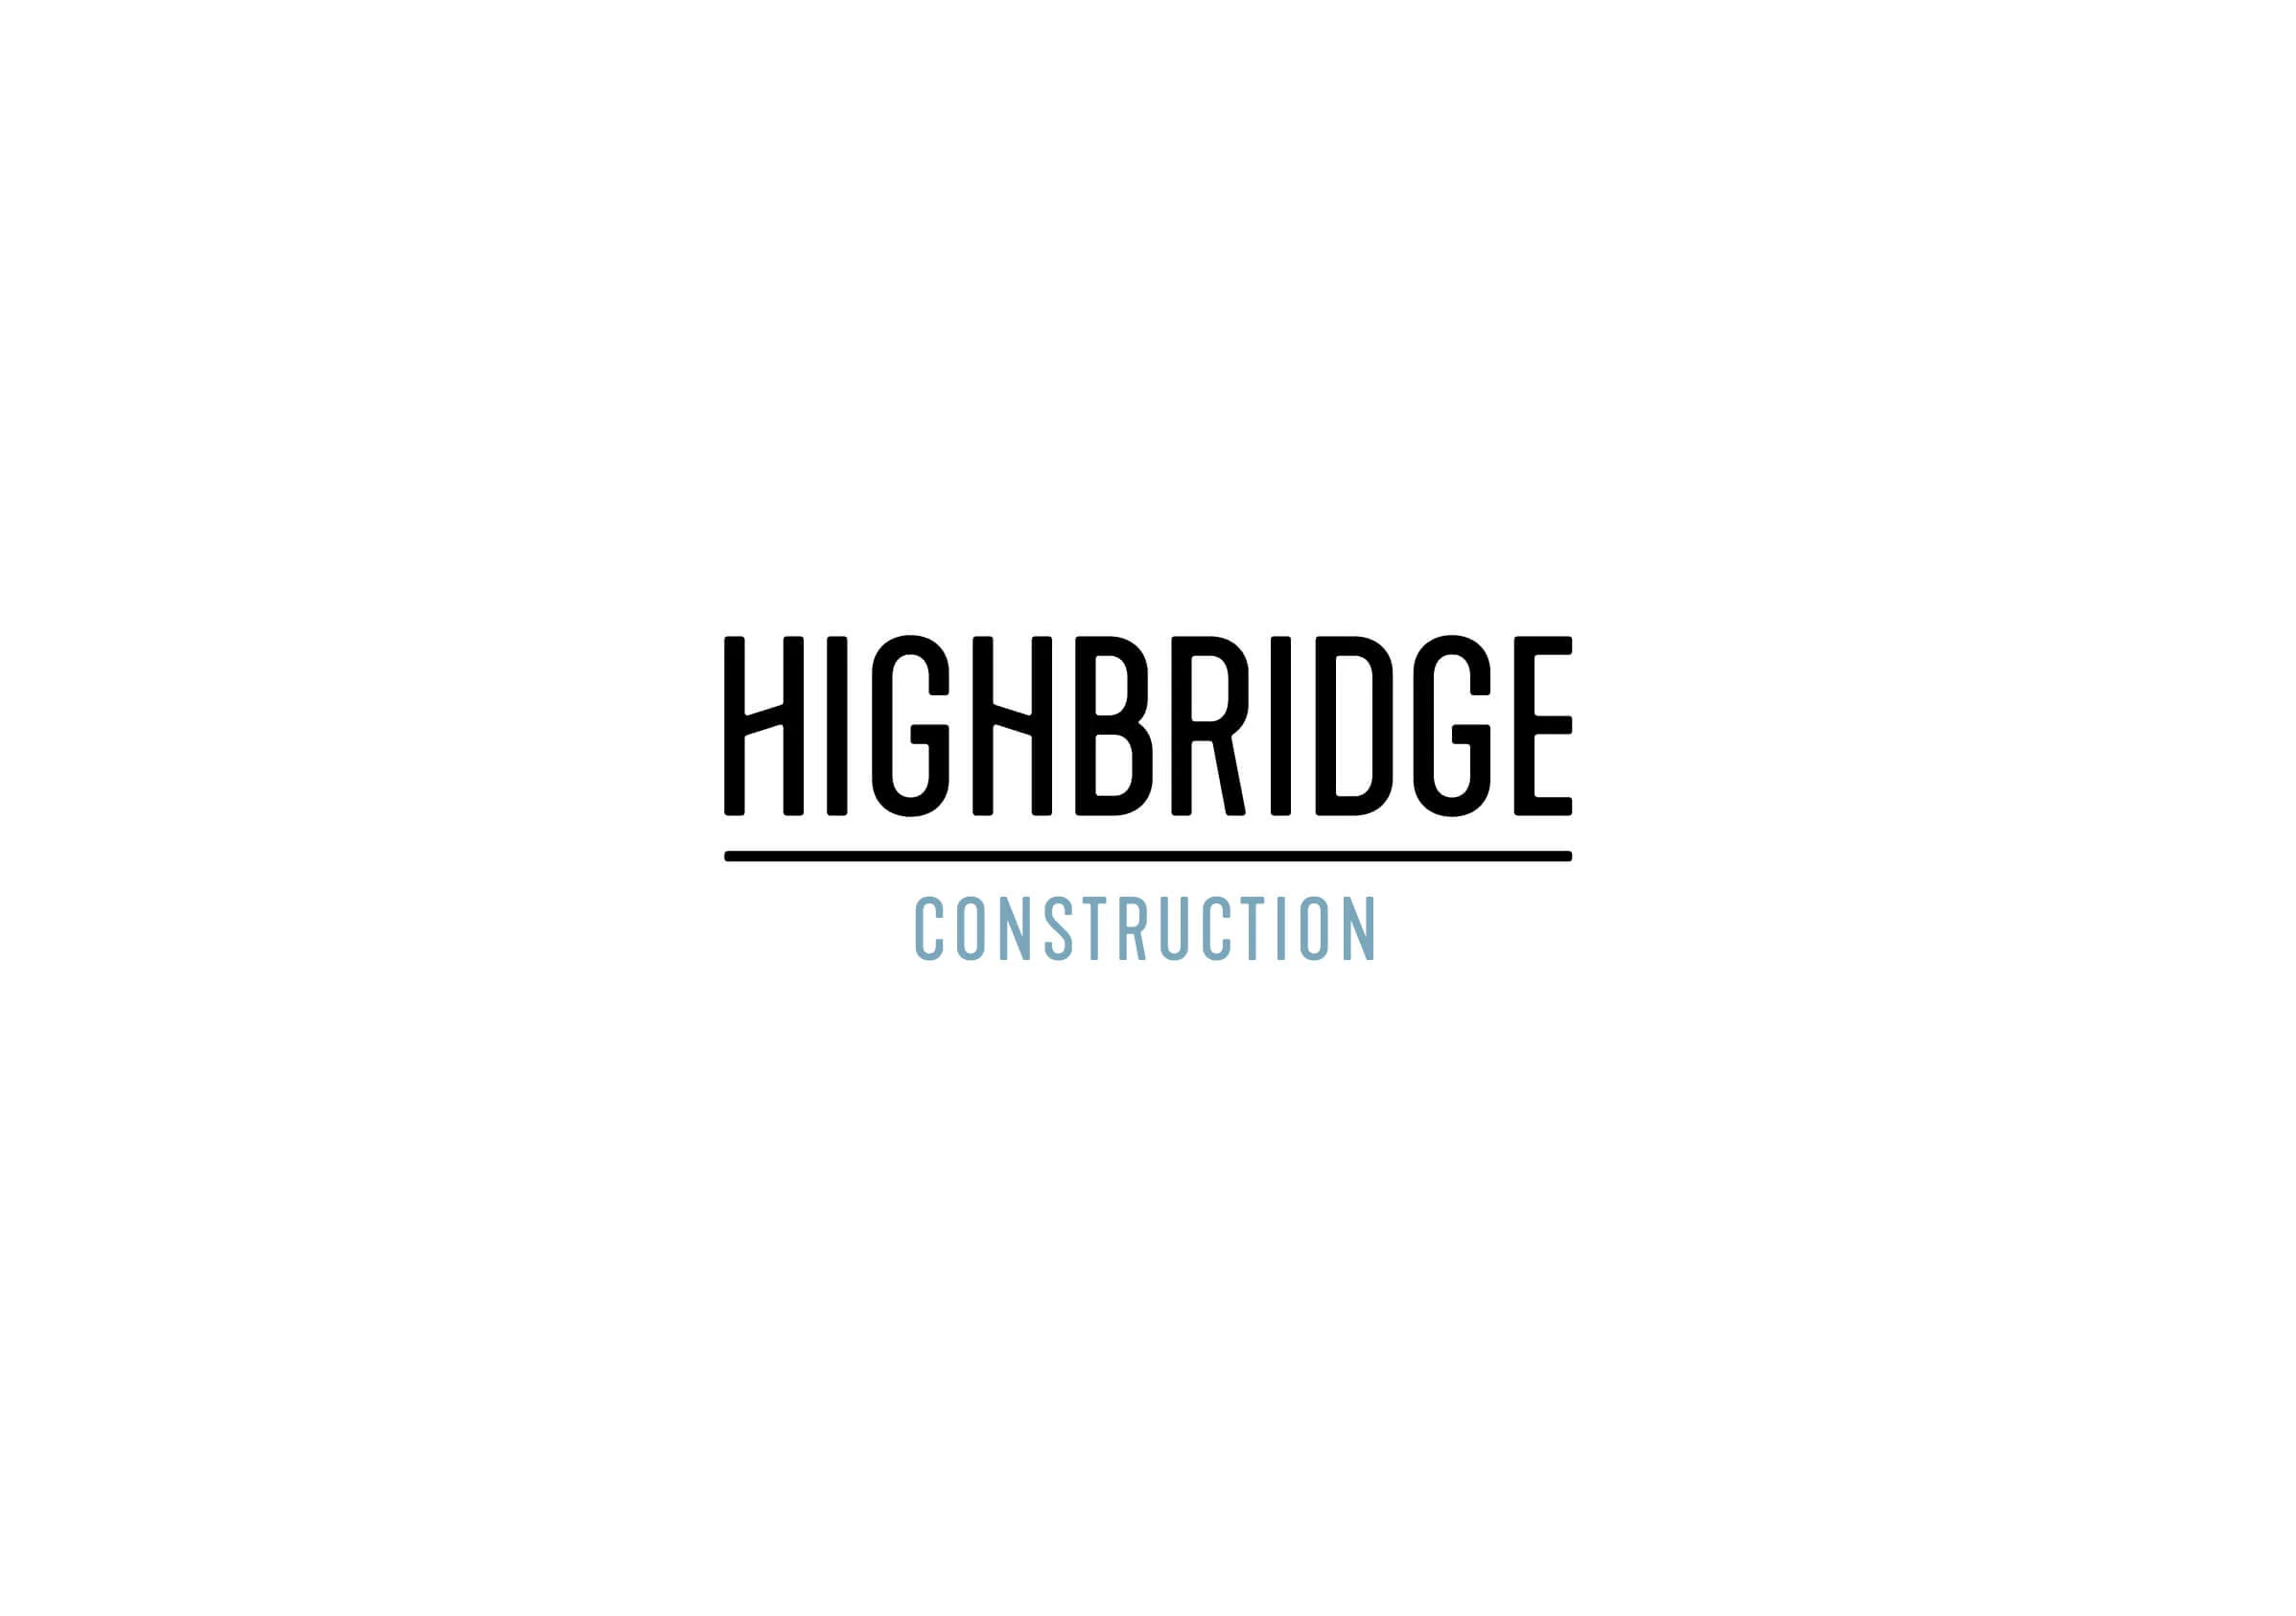 Highbridge Construction logo for Ottawa-based general contractor by graphic designer idApostle